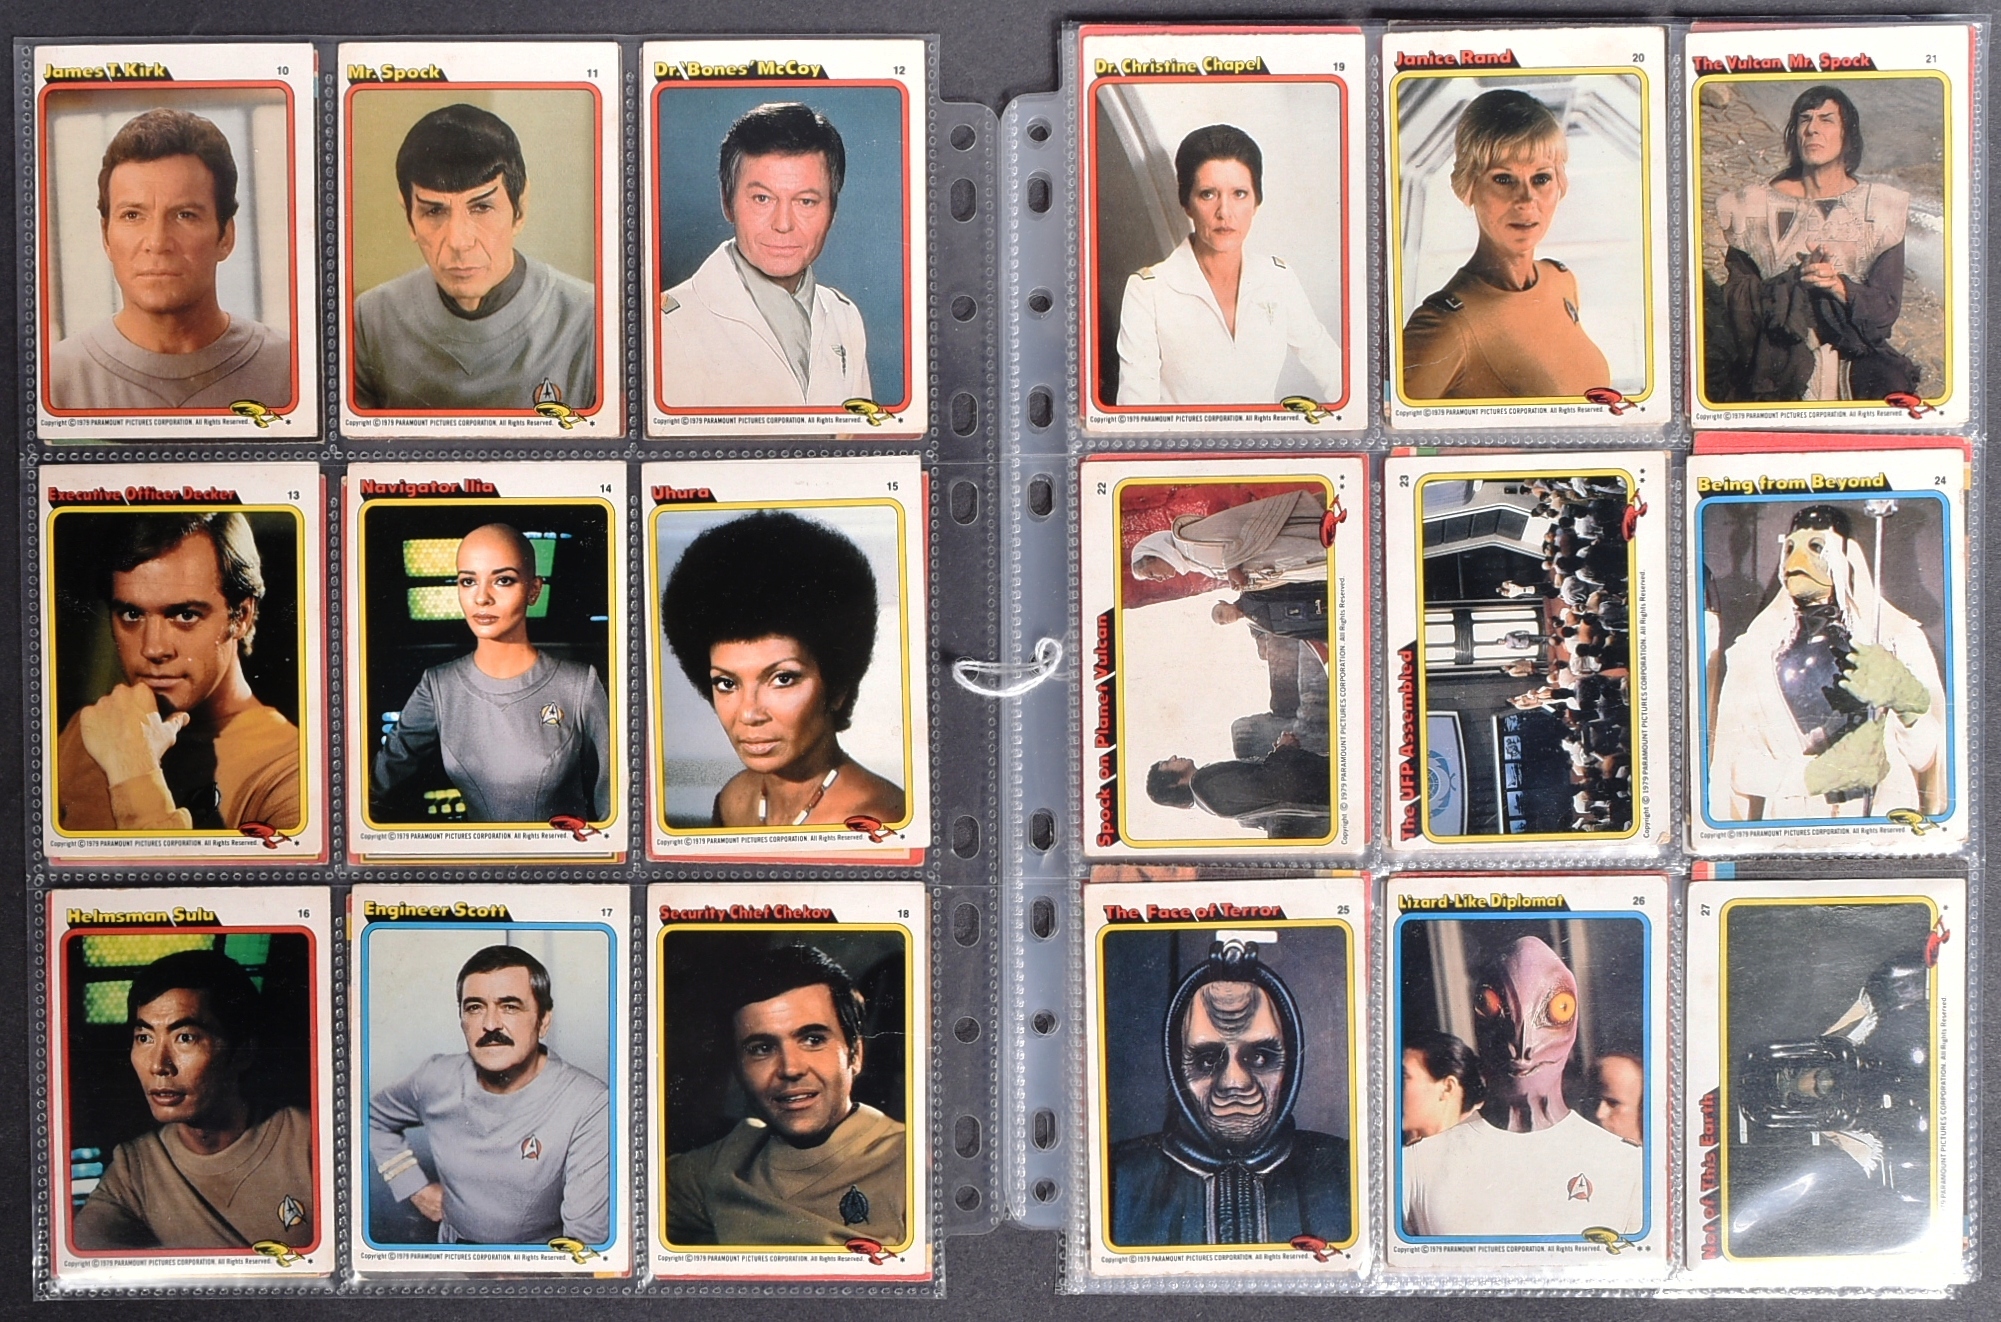 STAR TREK THE MOTION PICTURE - 1979 - FULL SET OF BUBBLEGUM CARDS